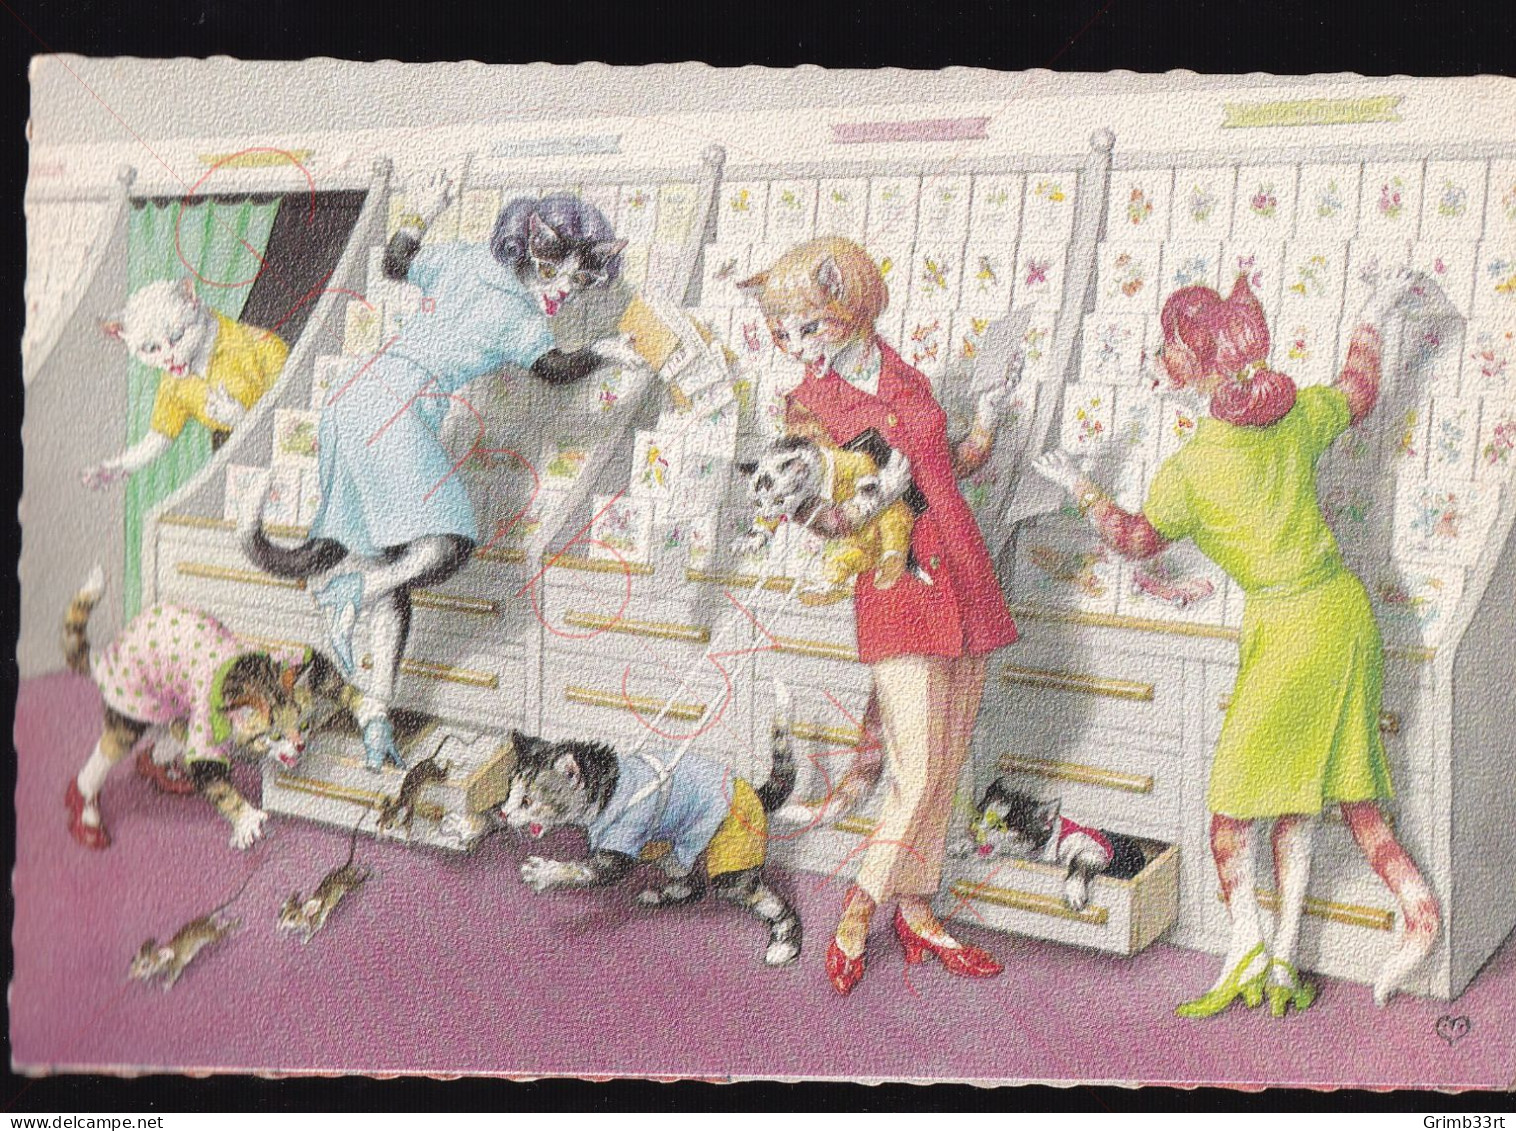 Alfred Mainzer - Chats Humanisés Et Habillés - Postkaart - Dressed Animals